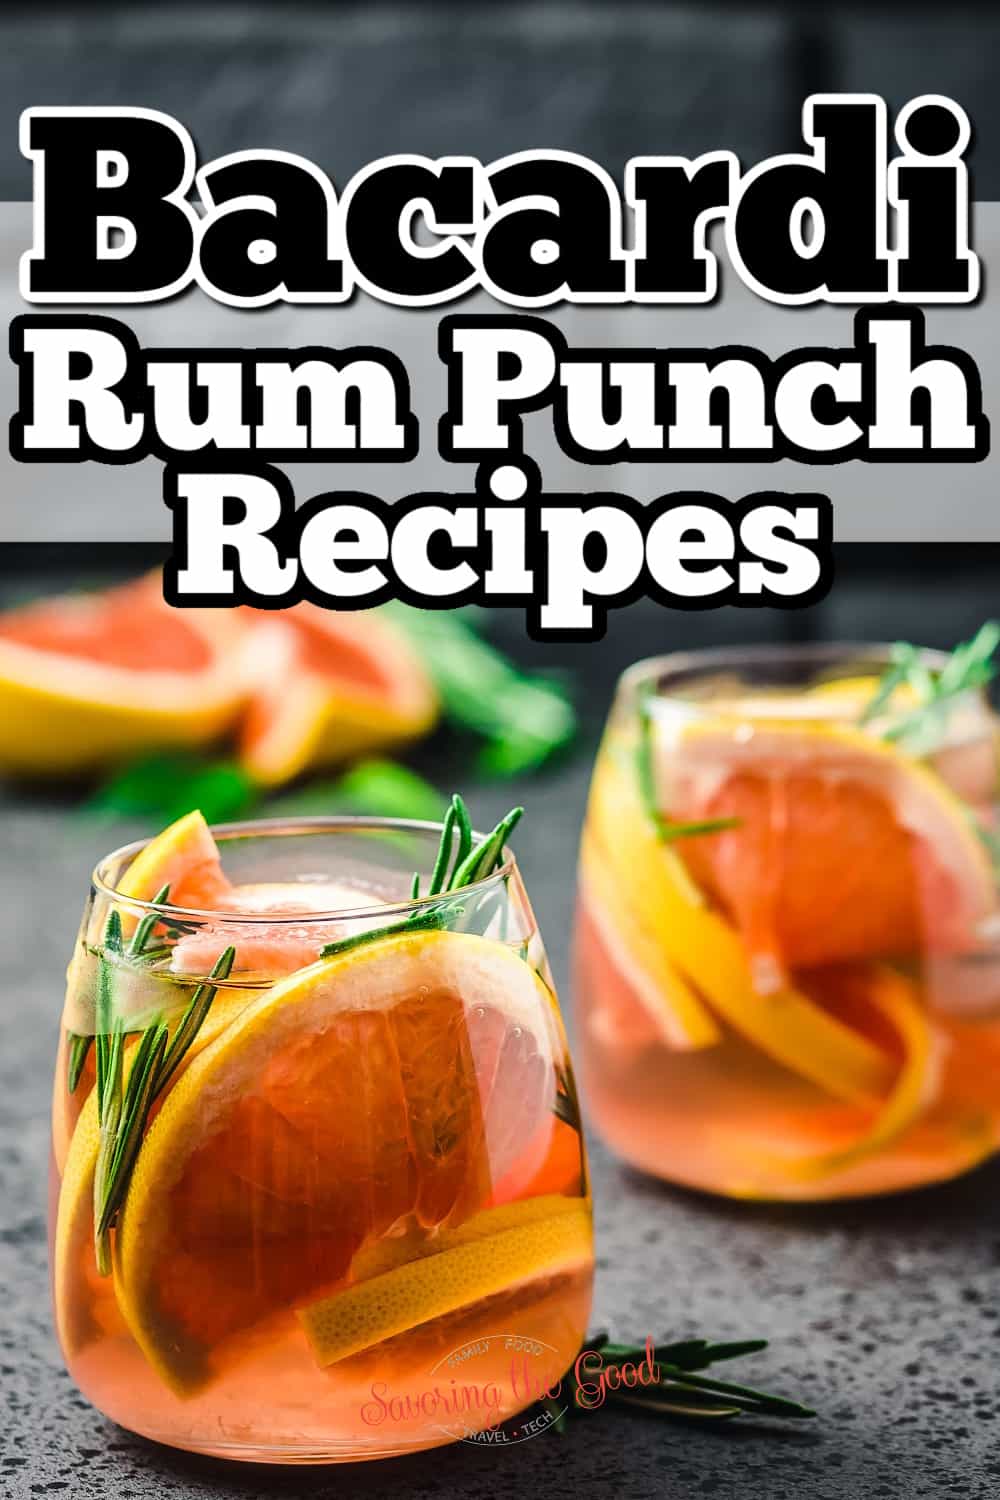 Bacardi rum punch reipes pinterest image 2